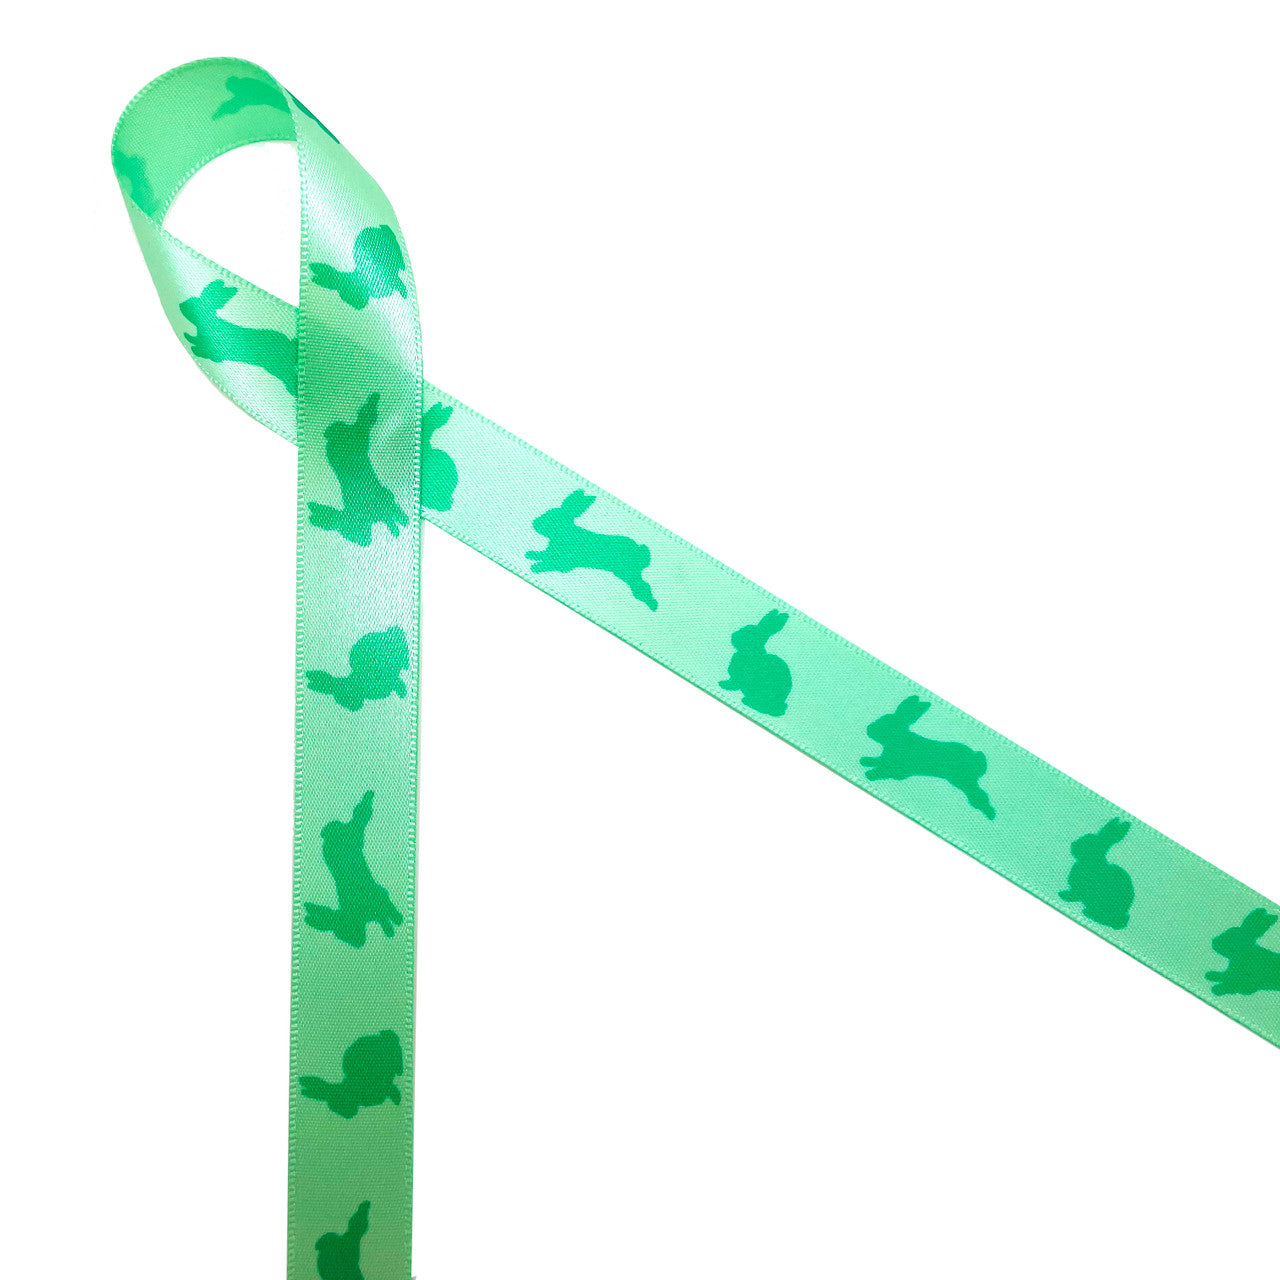 Sweet little green bunnies in silhouette hop along 5/8" mint green single face satin ribbon, 10 yards